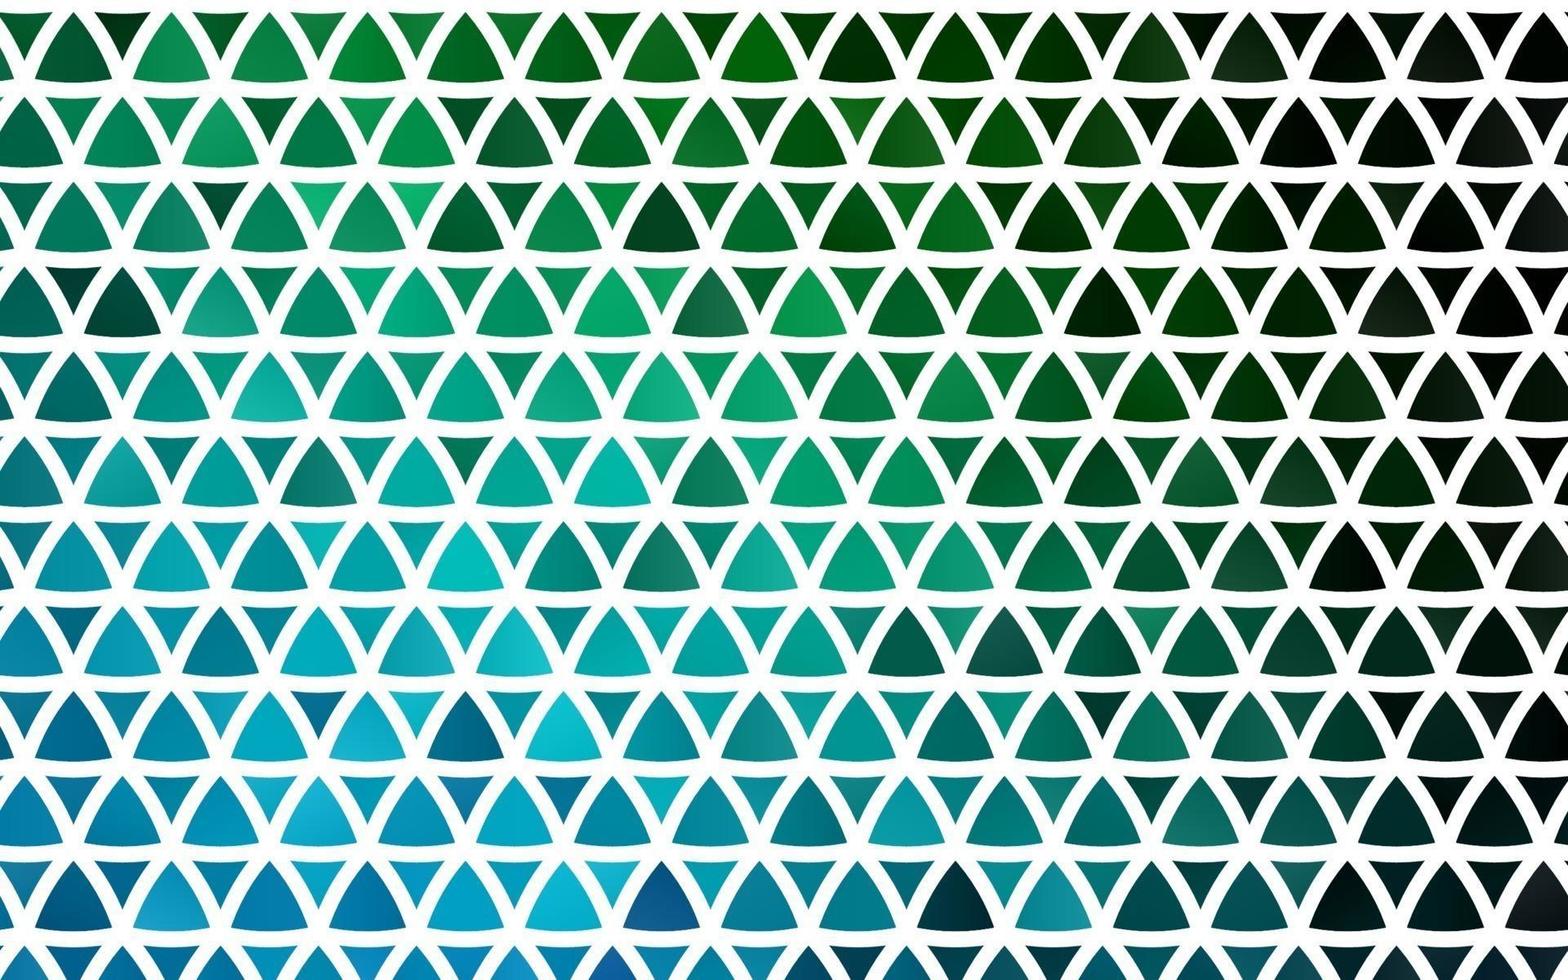 fond transparent vecteur bleu clair, vert avec des triangles.